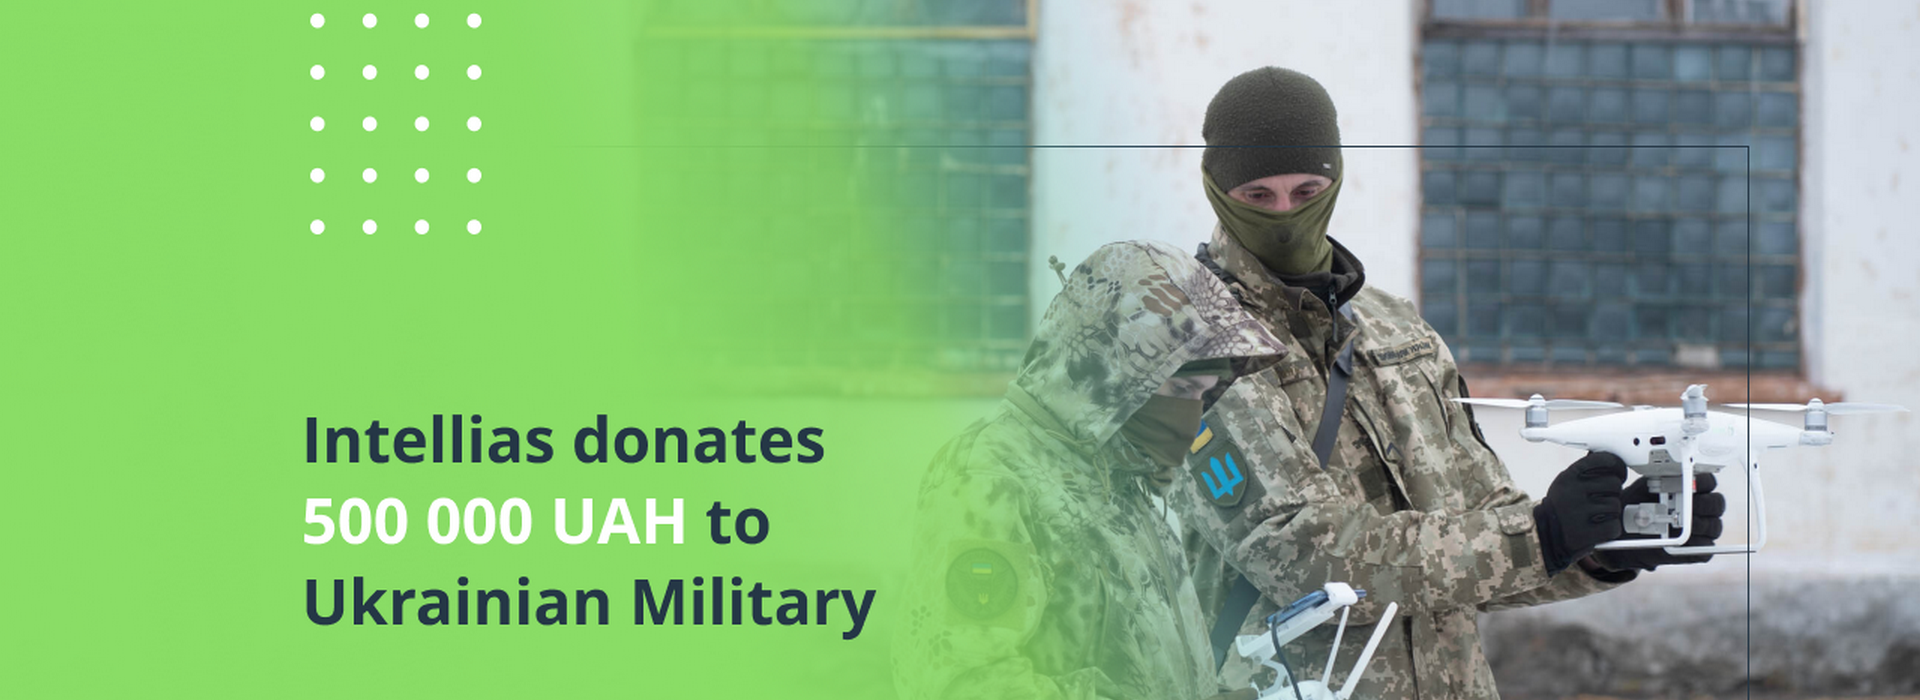 Intellias Donates Over Half a Million to the Ukrainian Army